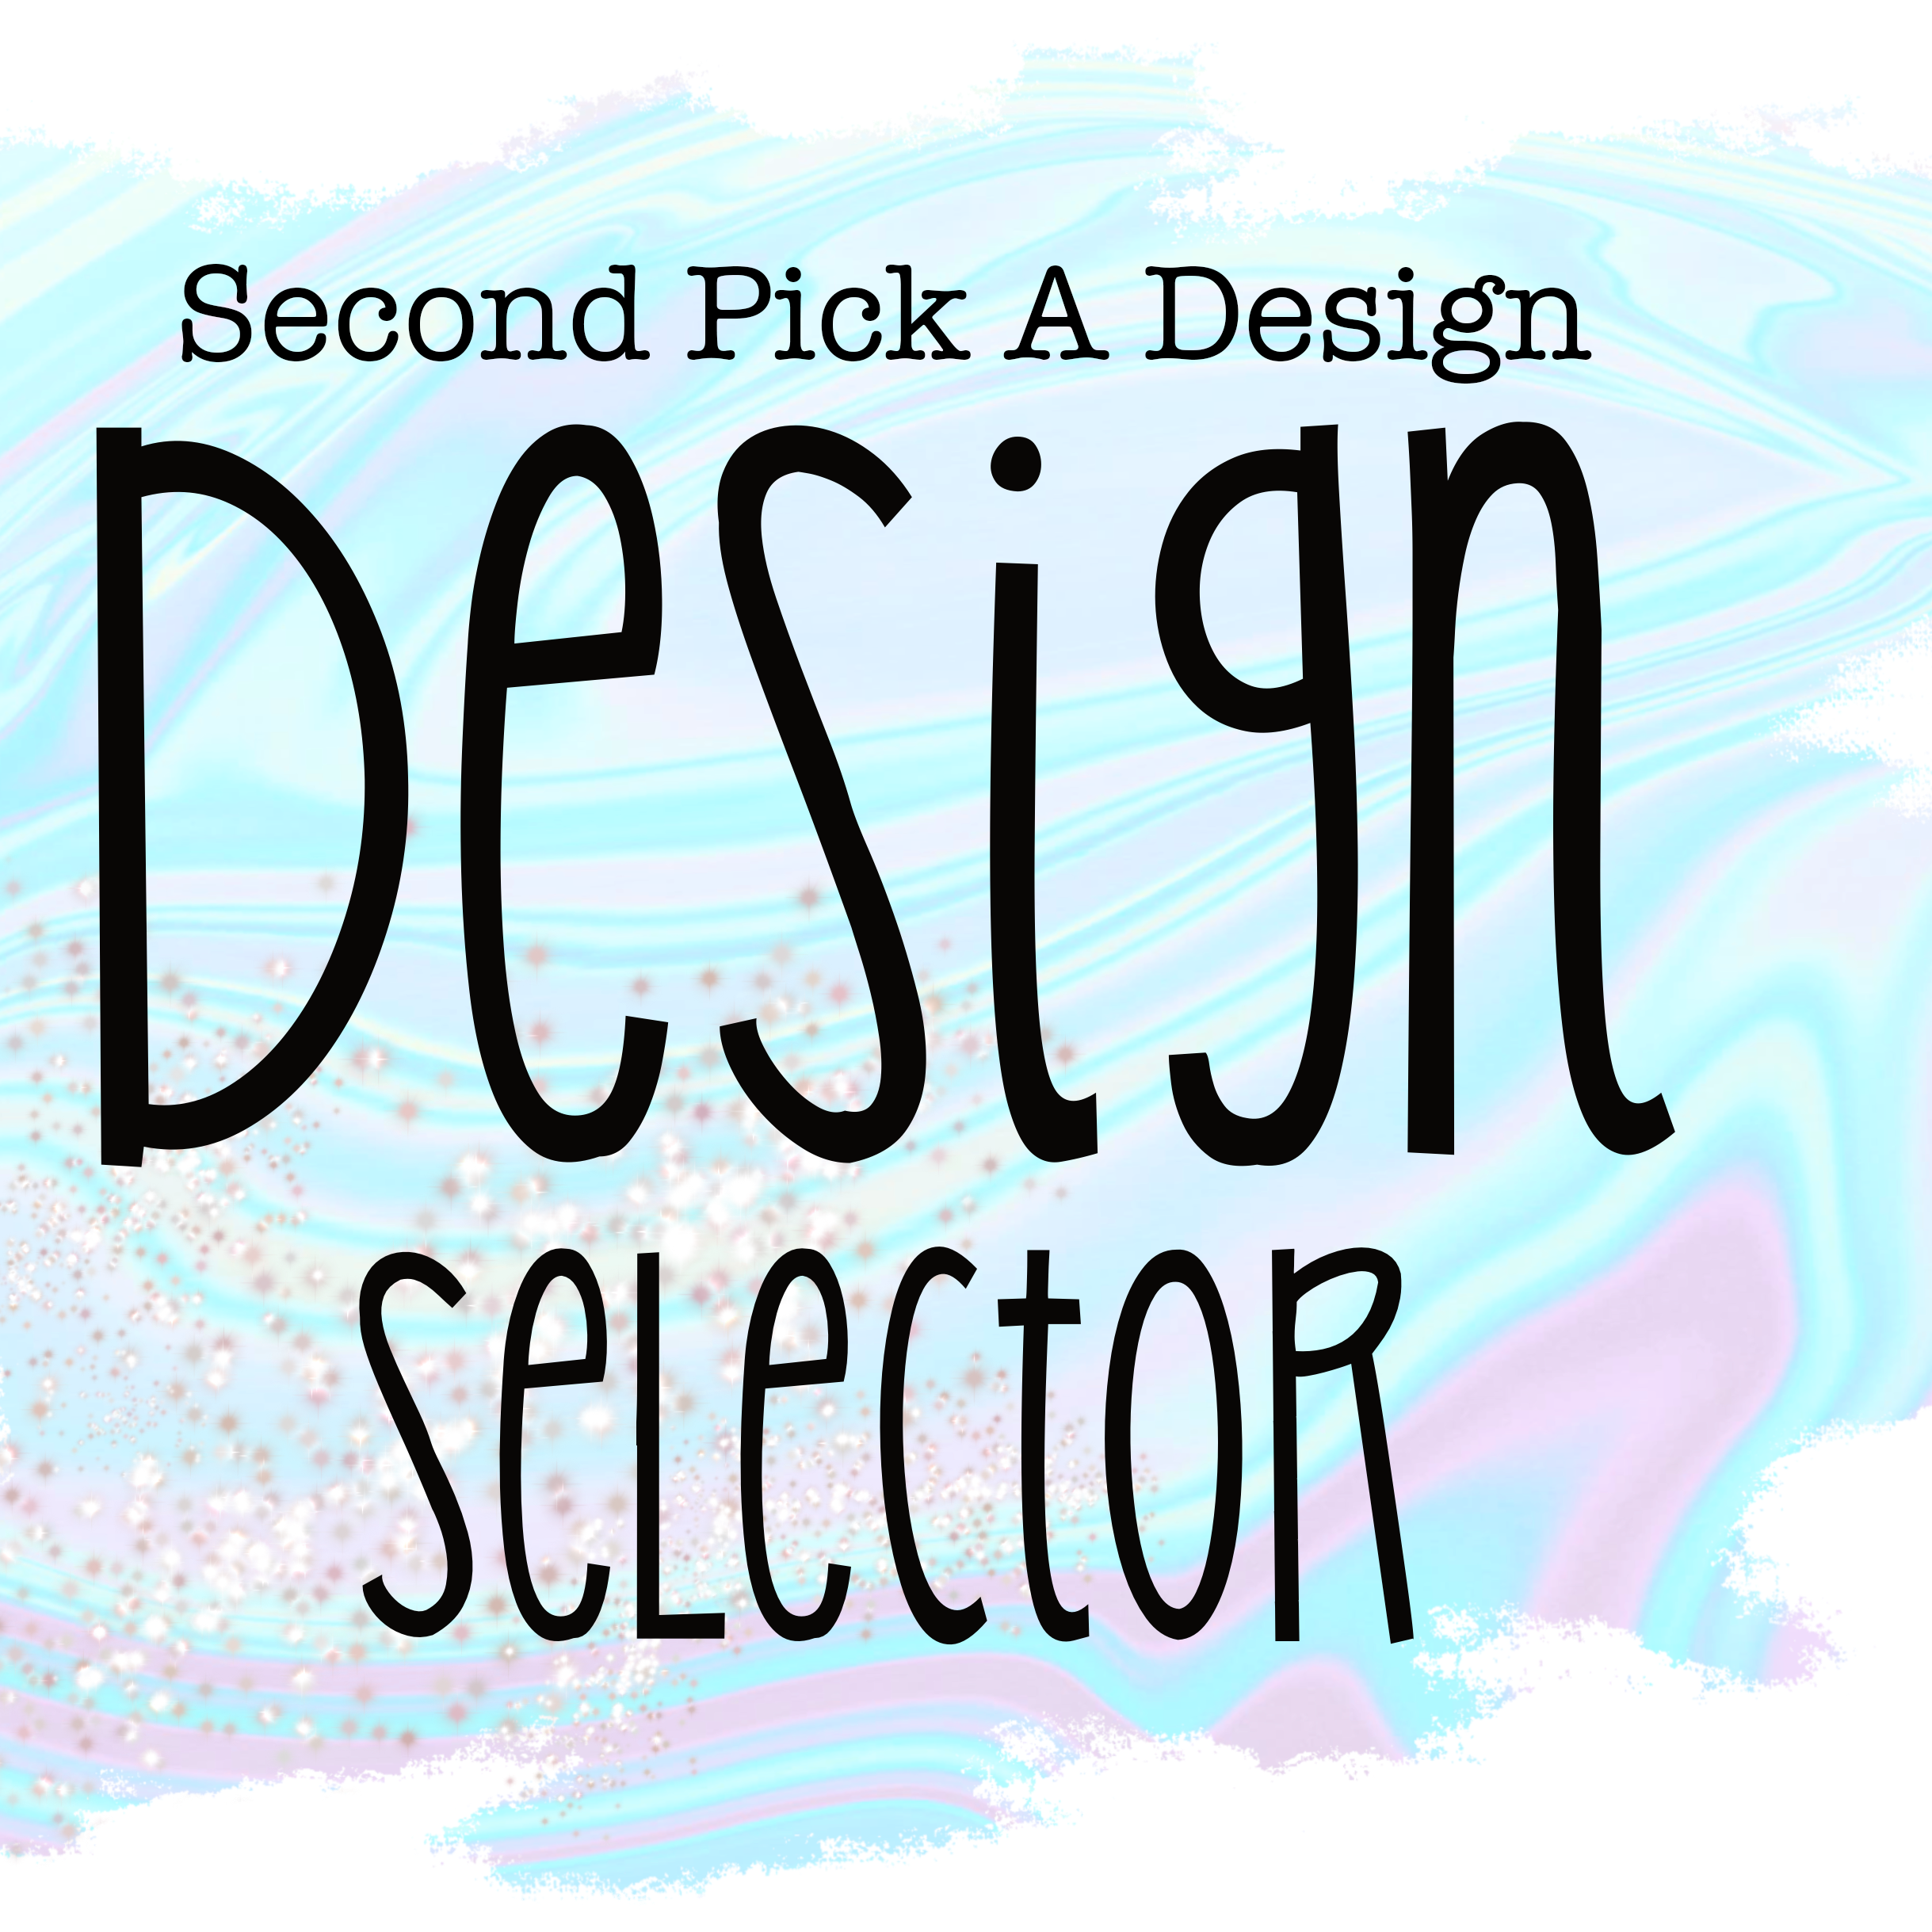 Design Selector (All Design Options)